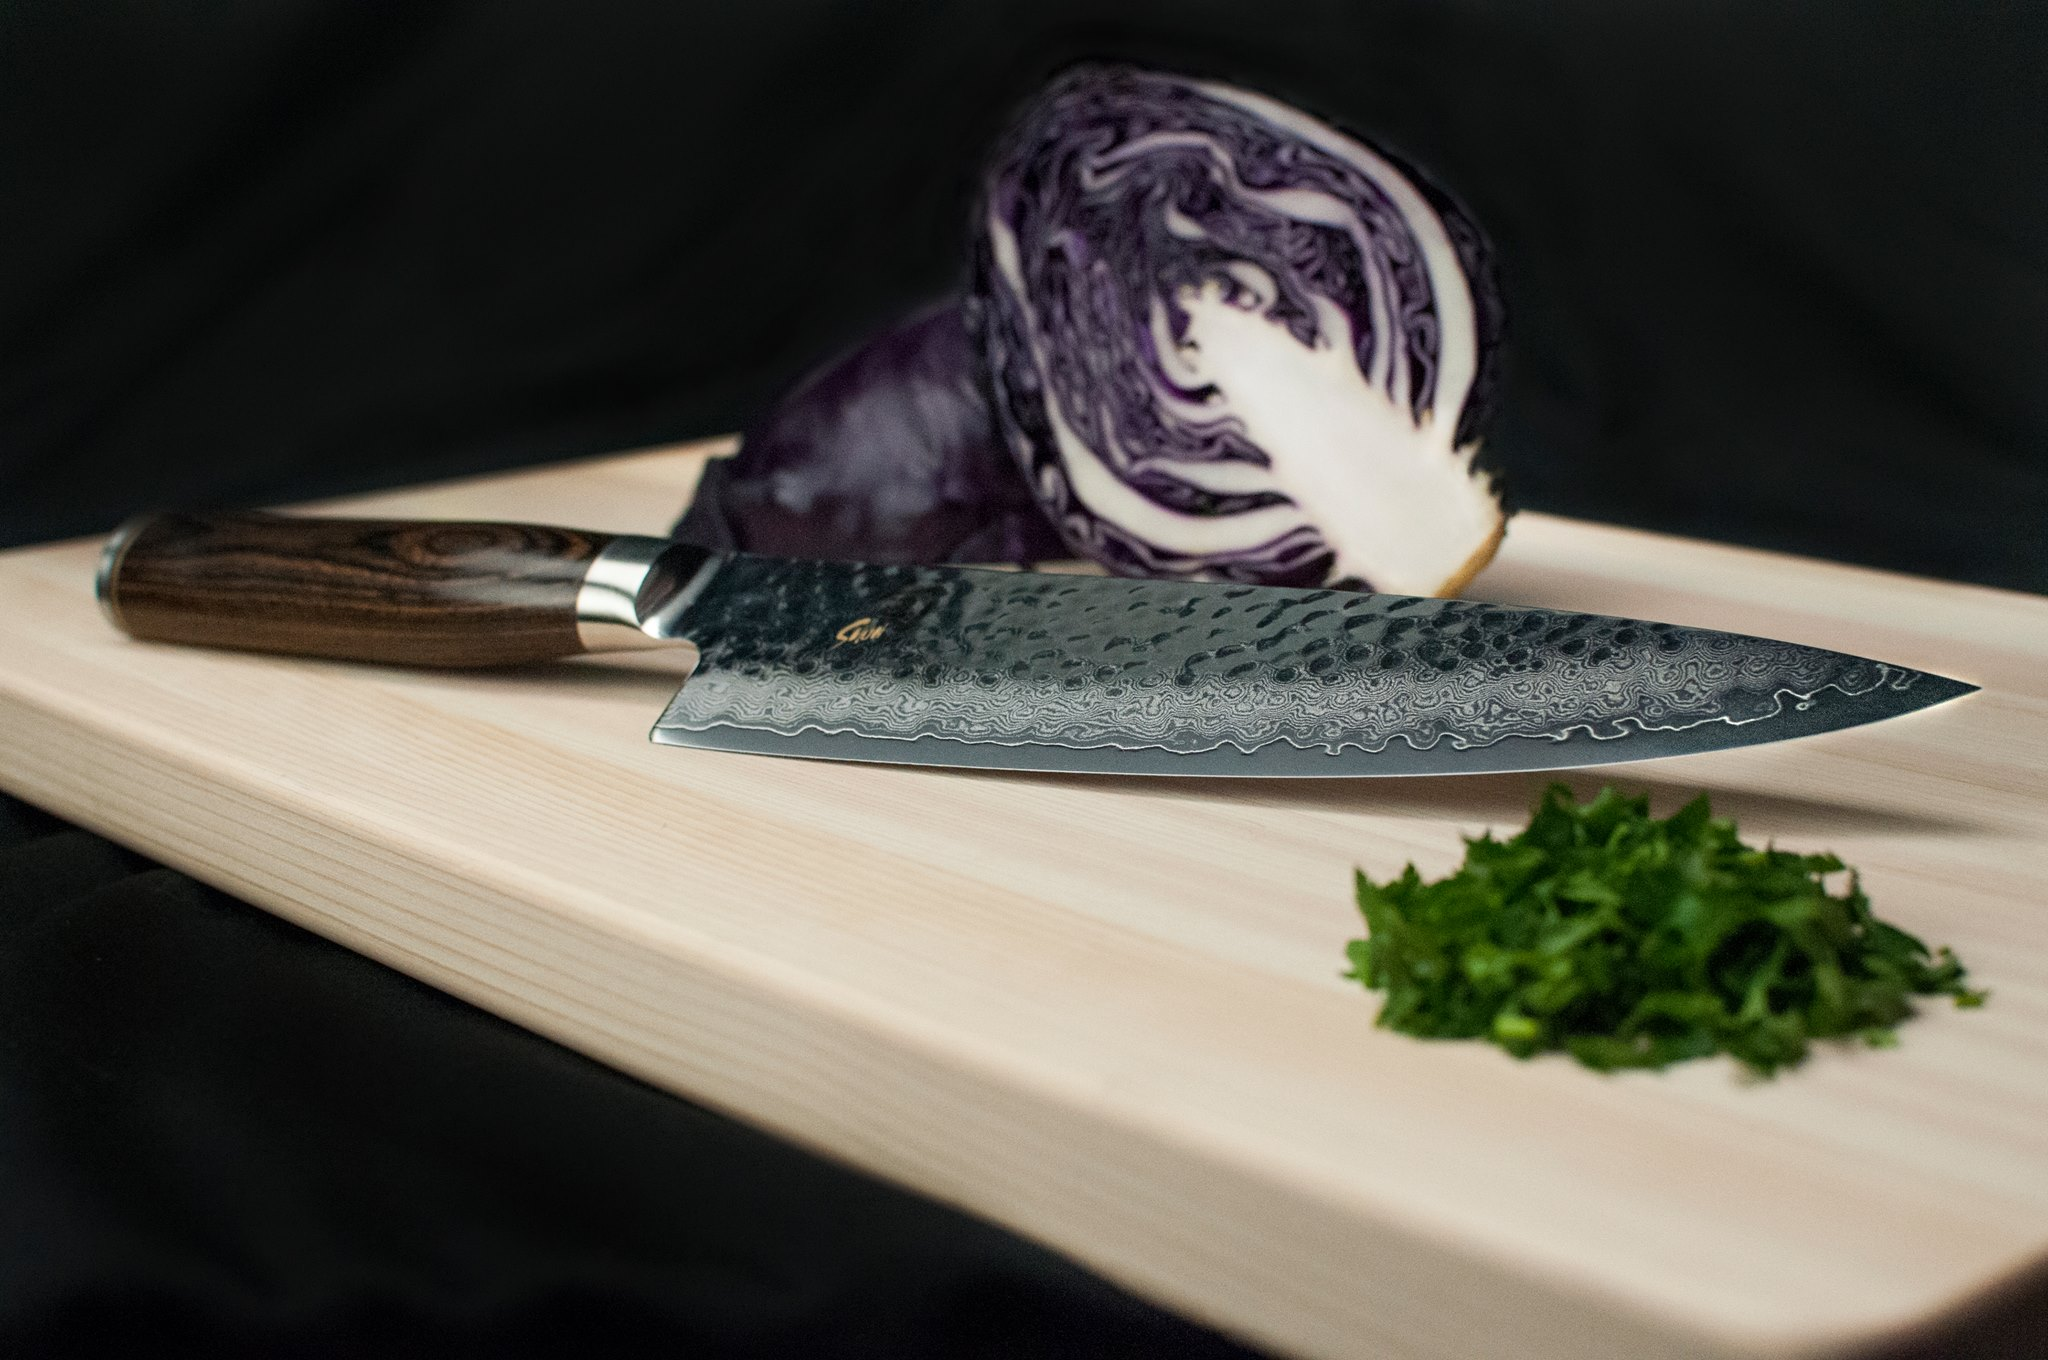 Shun Premier 2-Piece Carving Knife Set